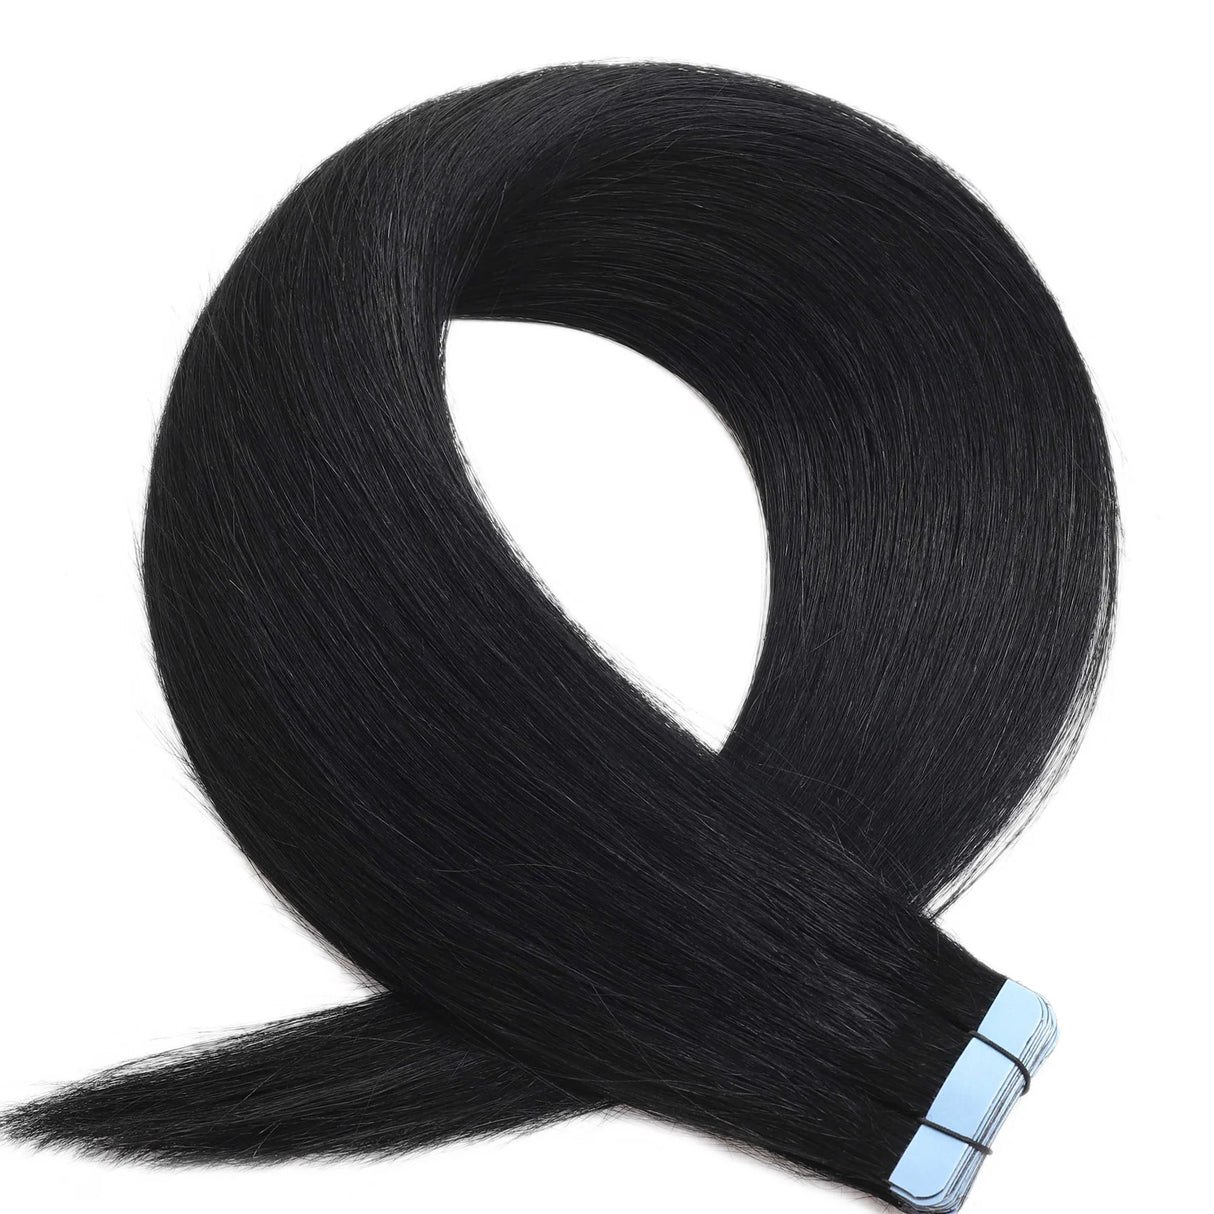 Tape Hair Extensions 21" #1 Jet Black - 100% Human Hair